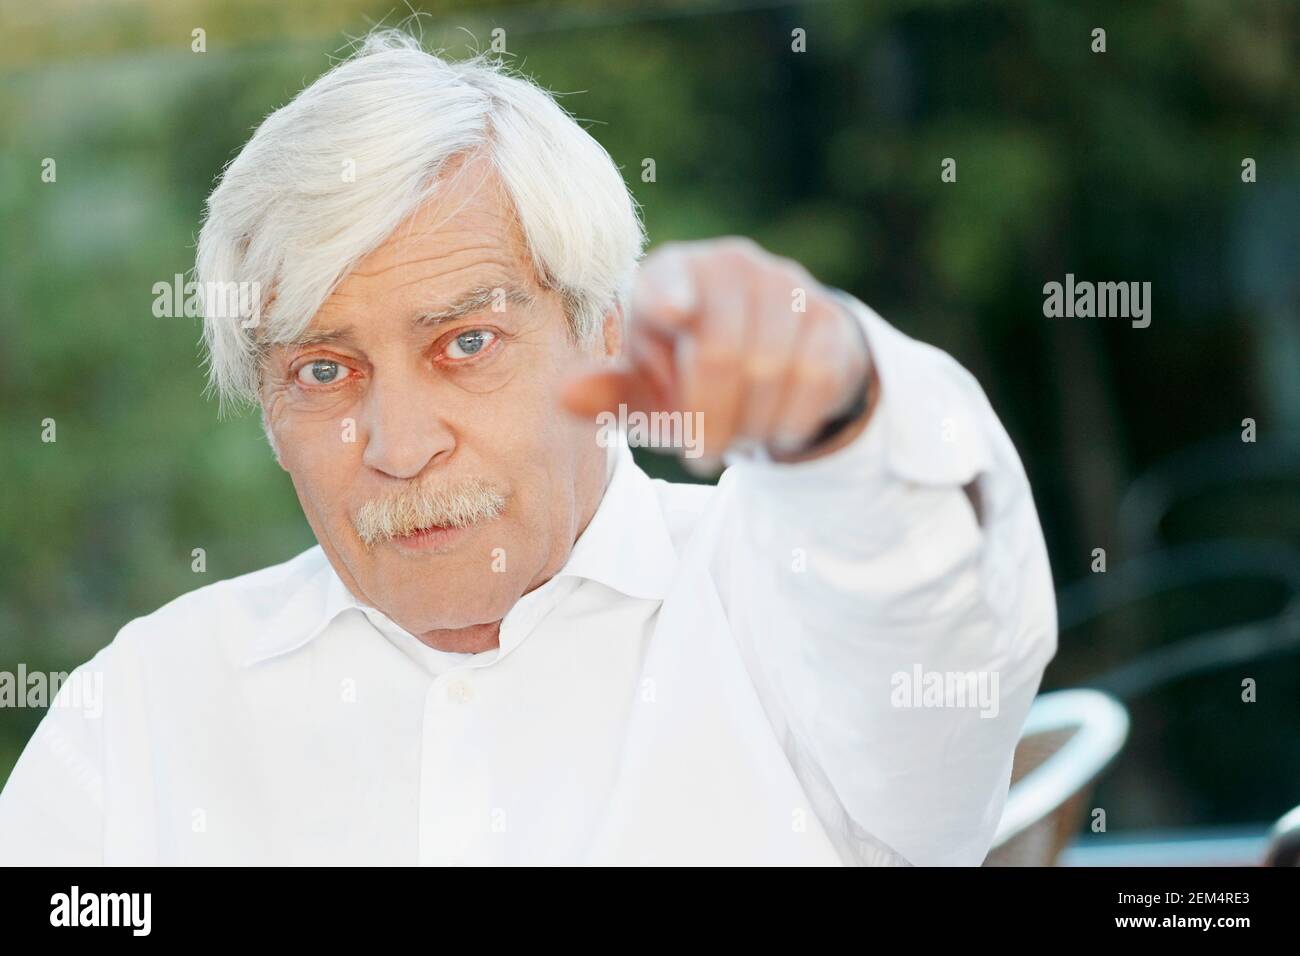 Portrait of a senior man pointing Stock Photo